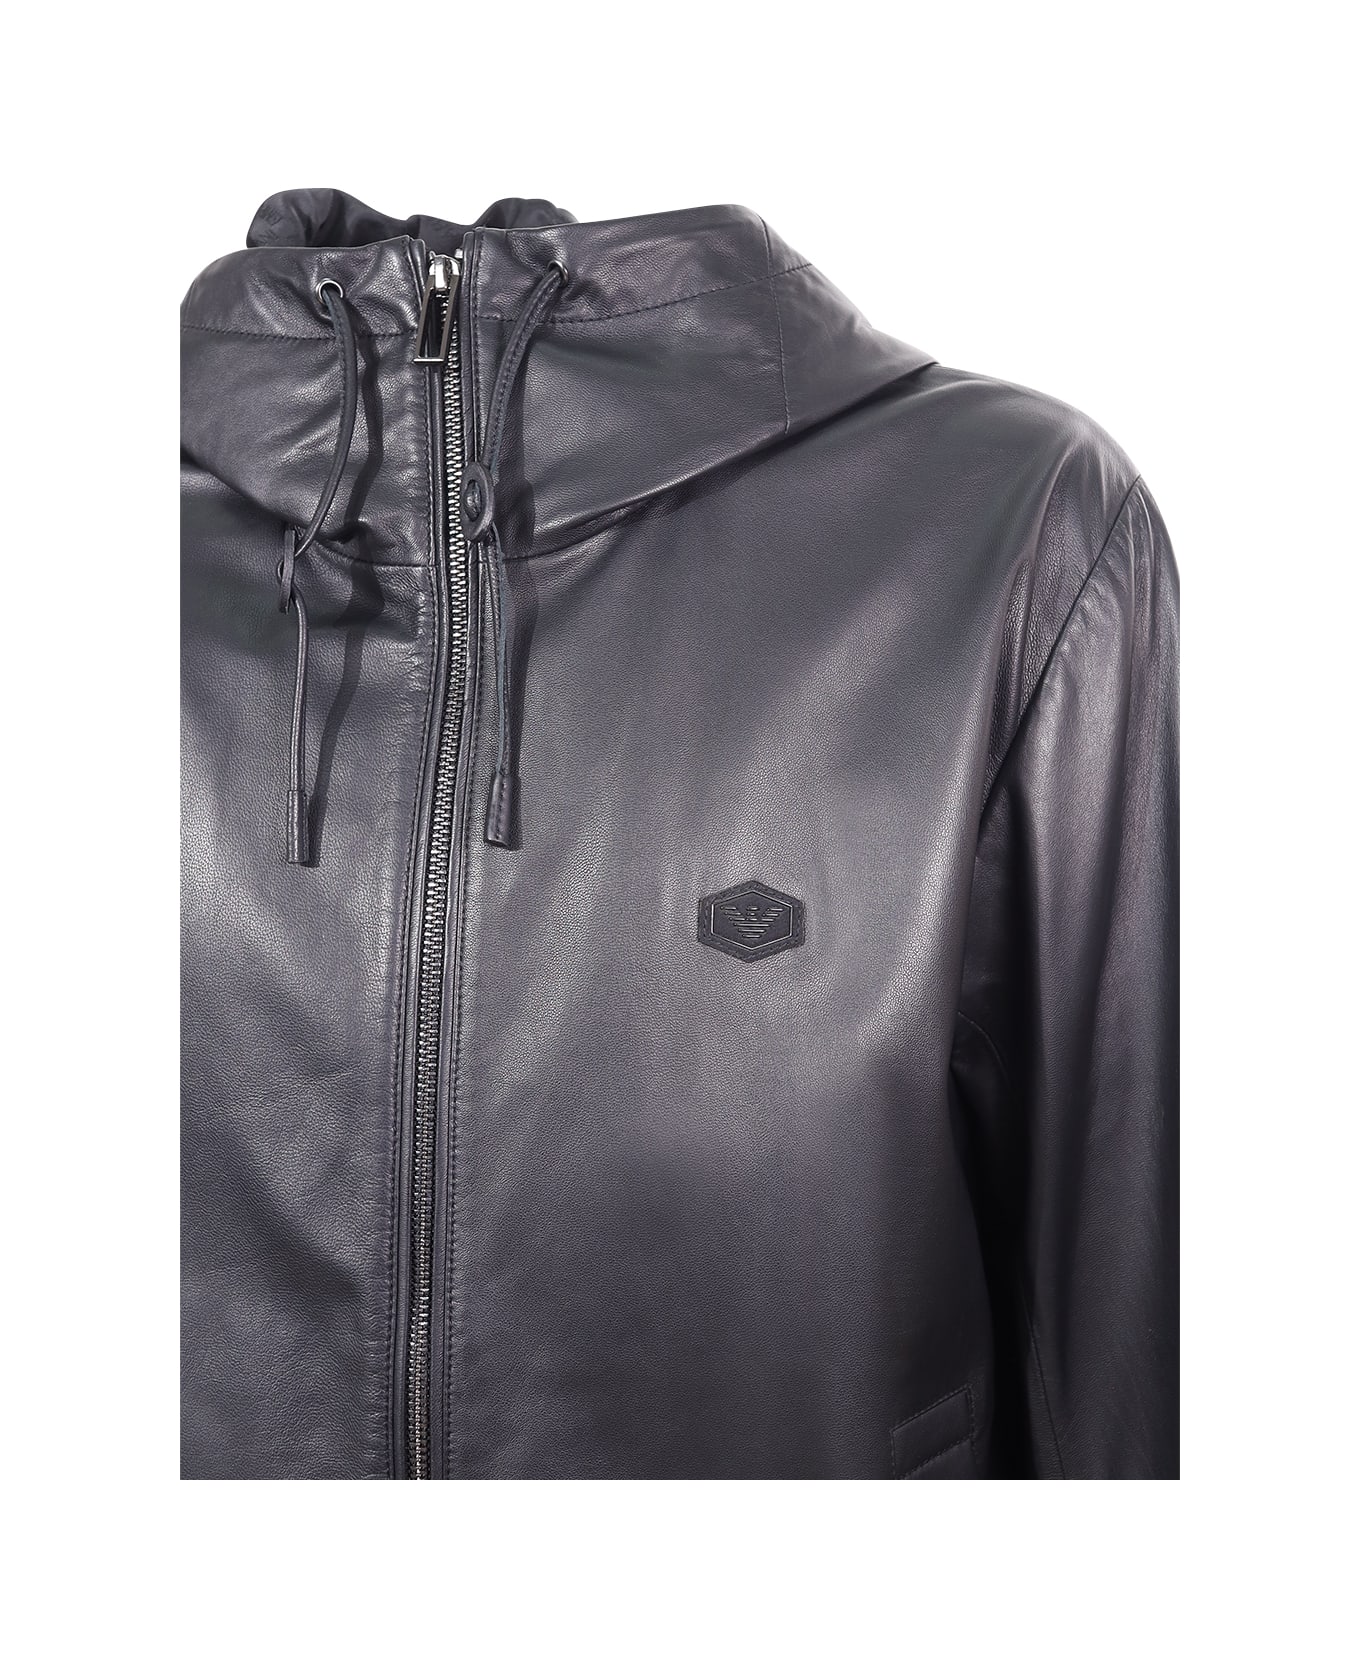 Emporio Armani Jacket - Black ジャケット